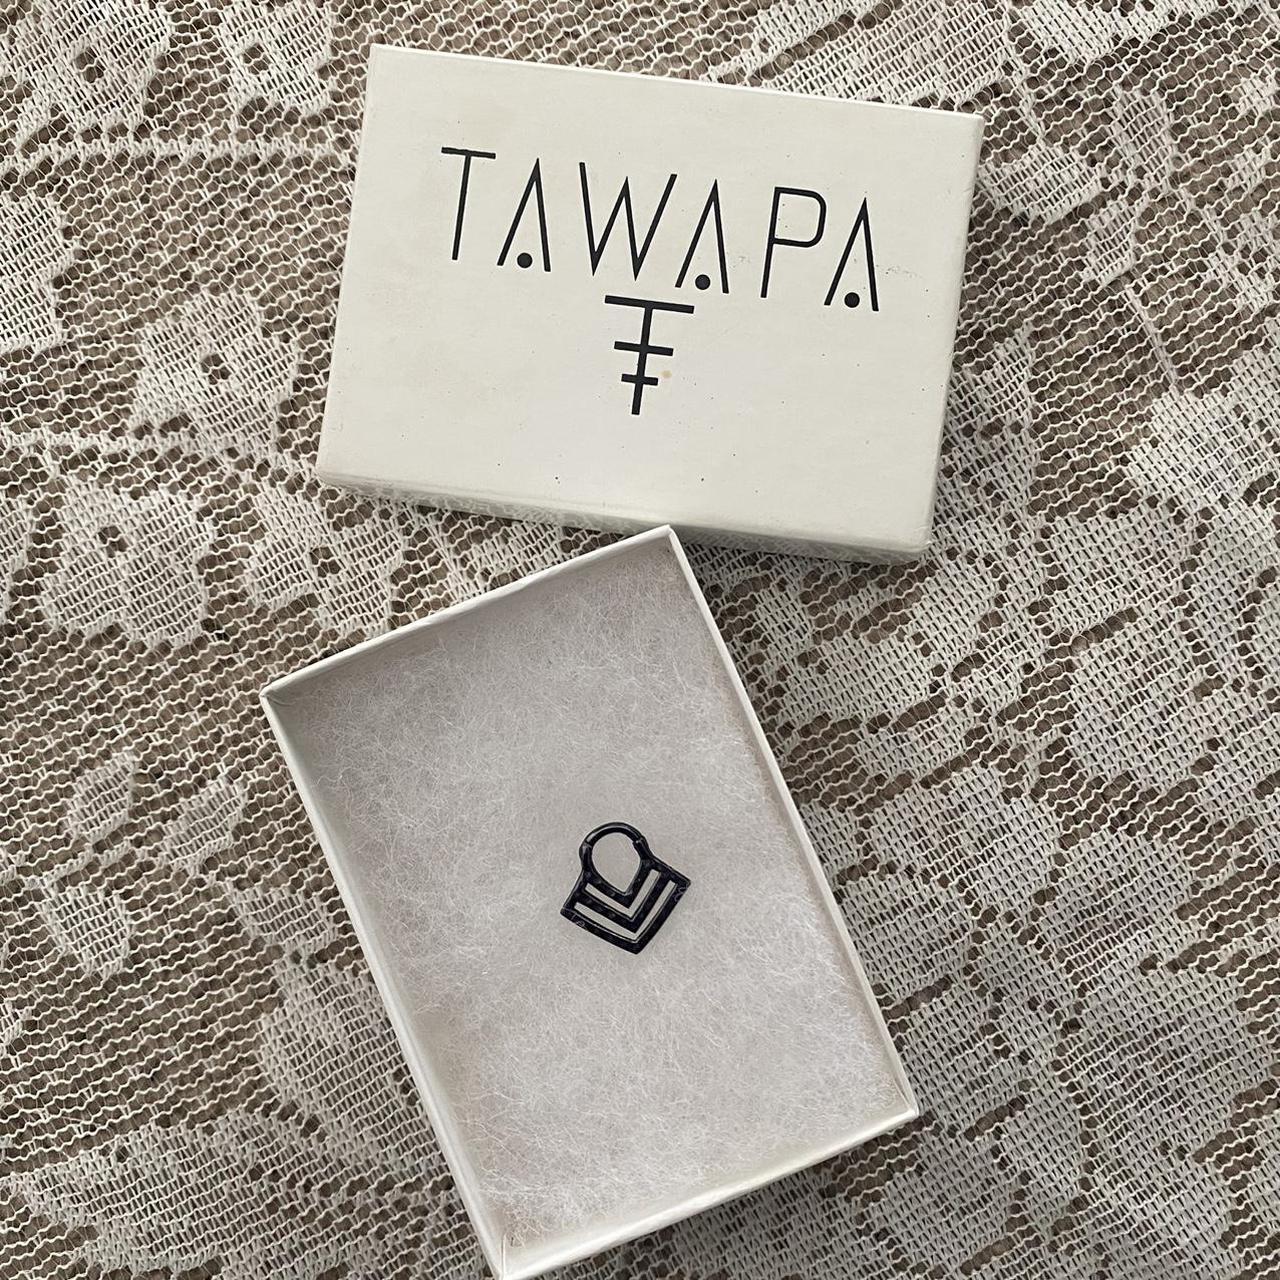 Tawapa Women's Jewellery (3)